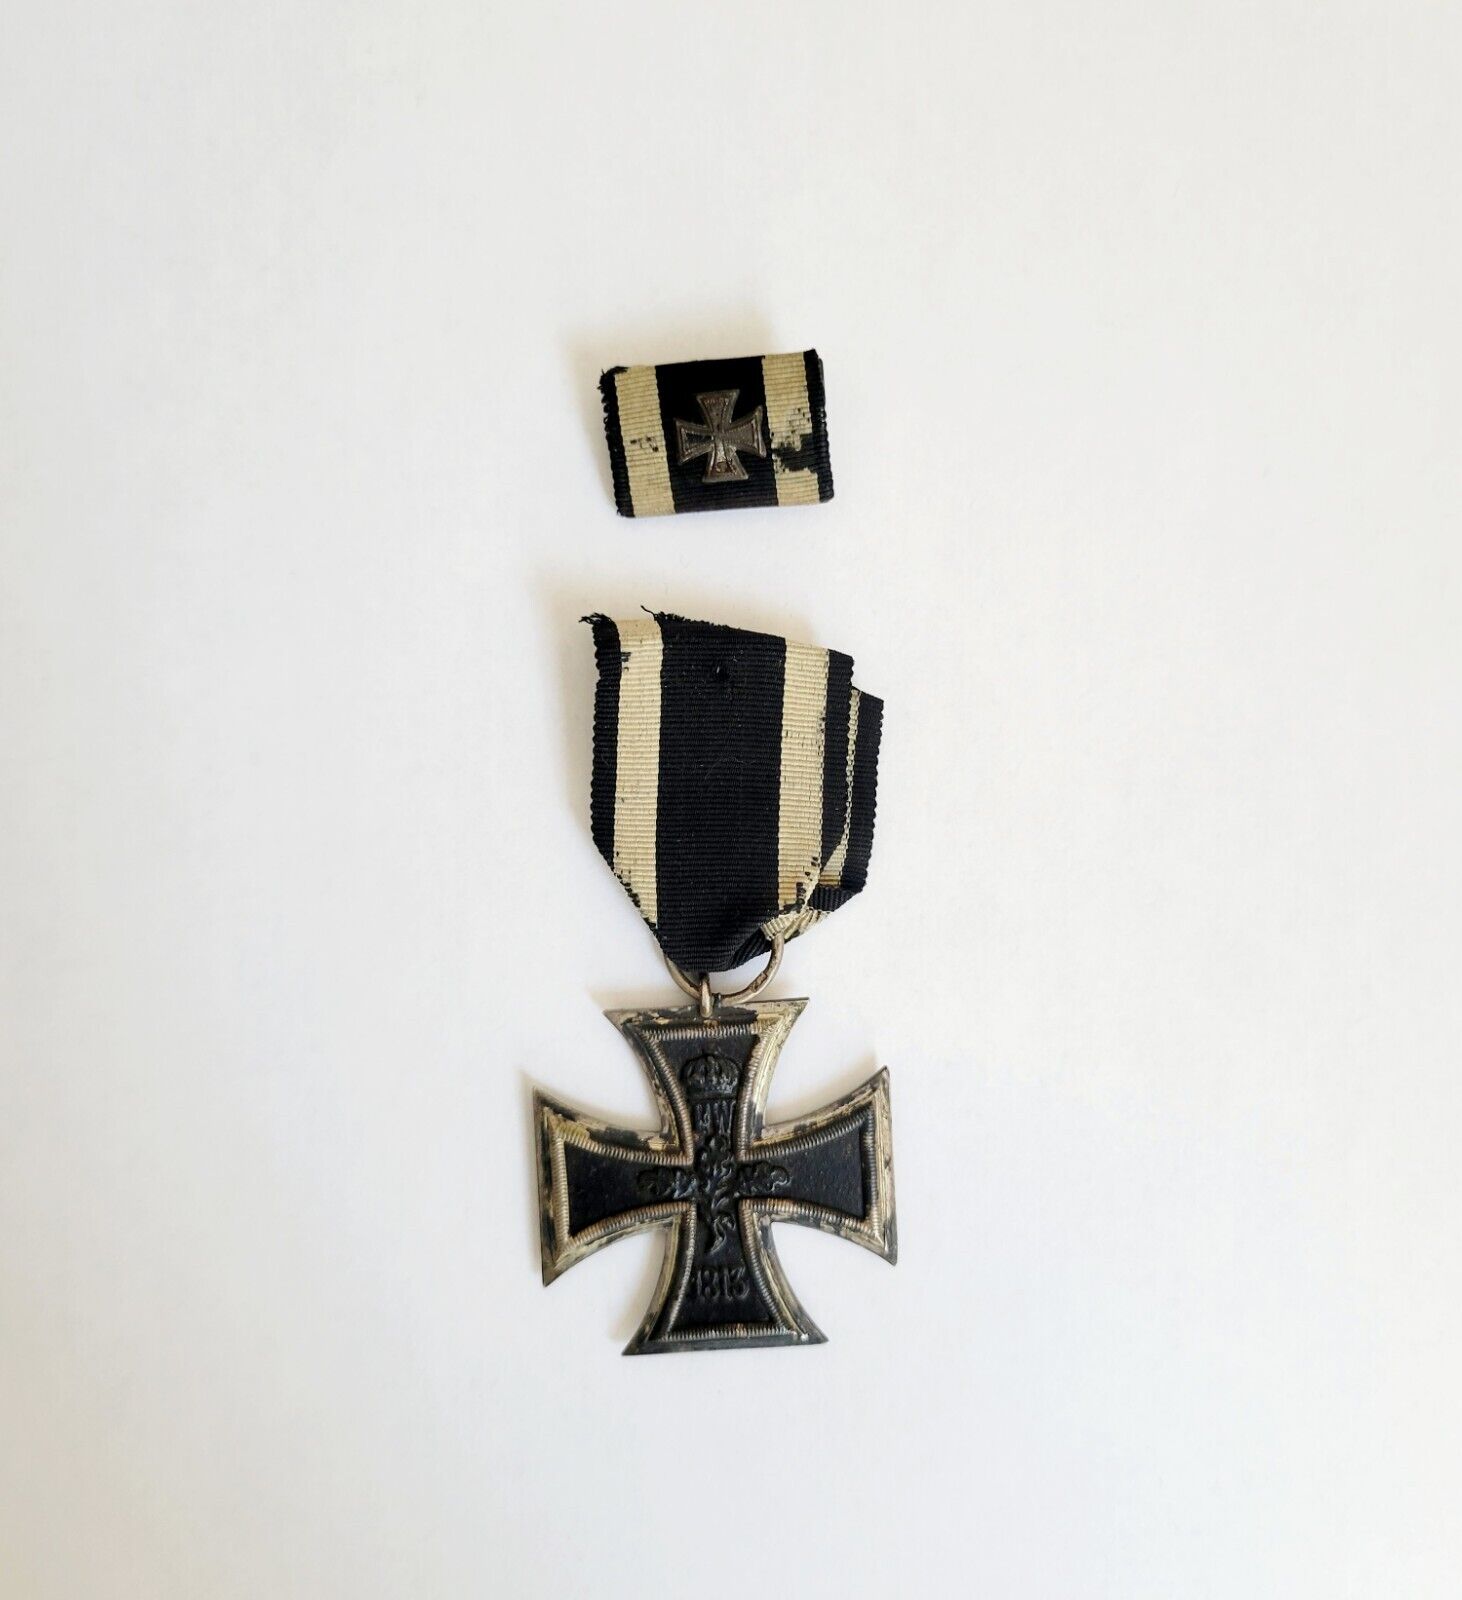 Original 1914 Ww1 German Iron Cross Medal With Pin And Ribbon.